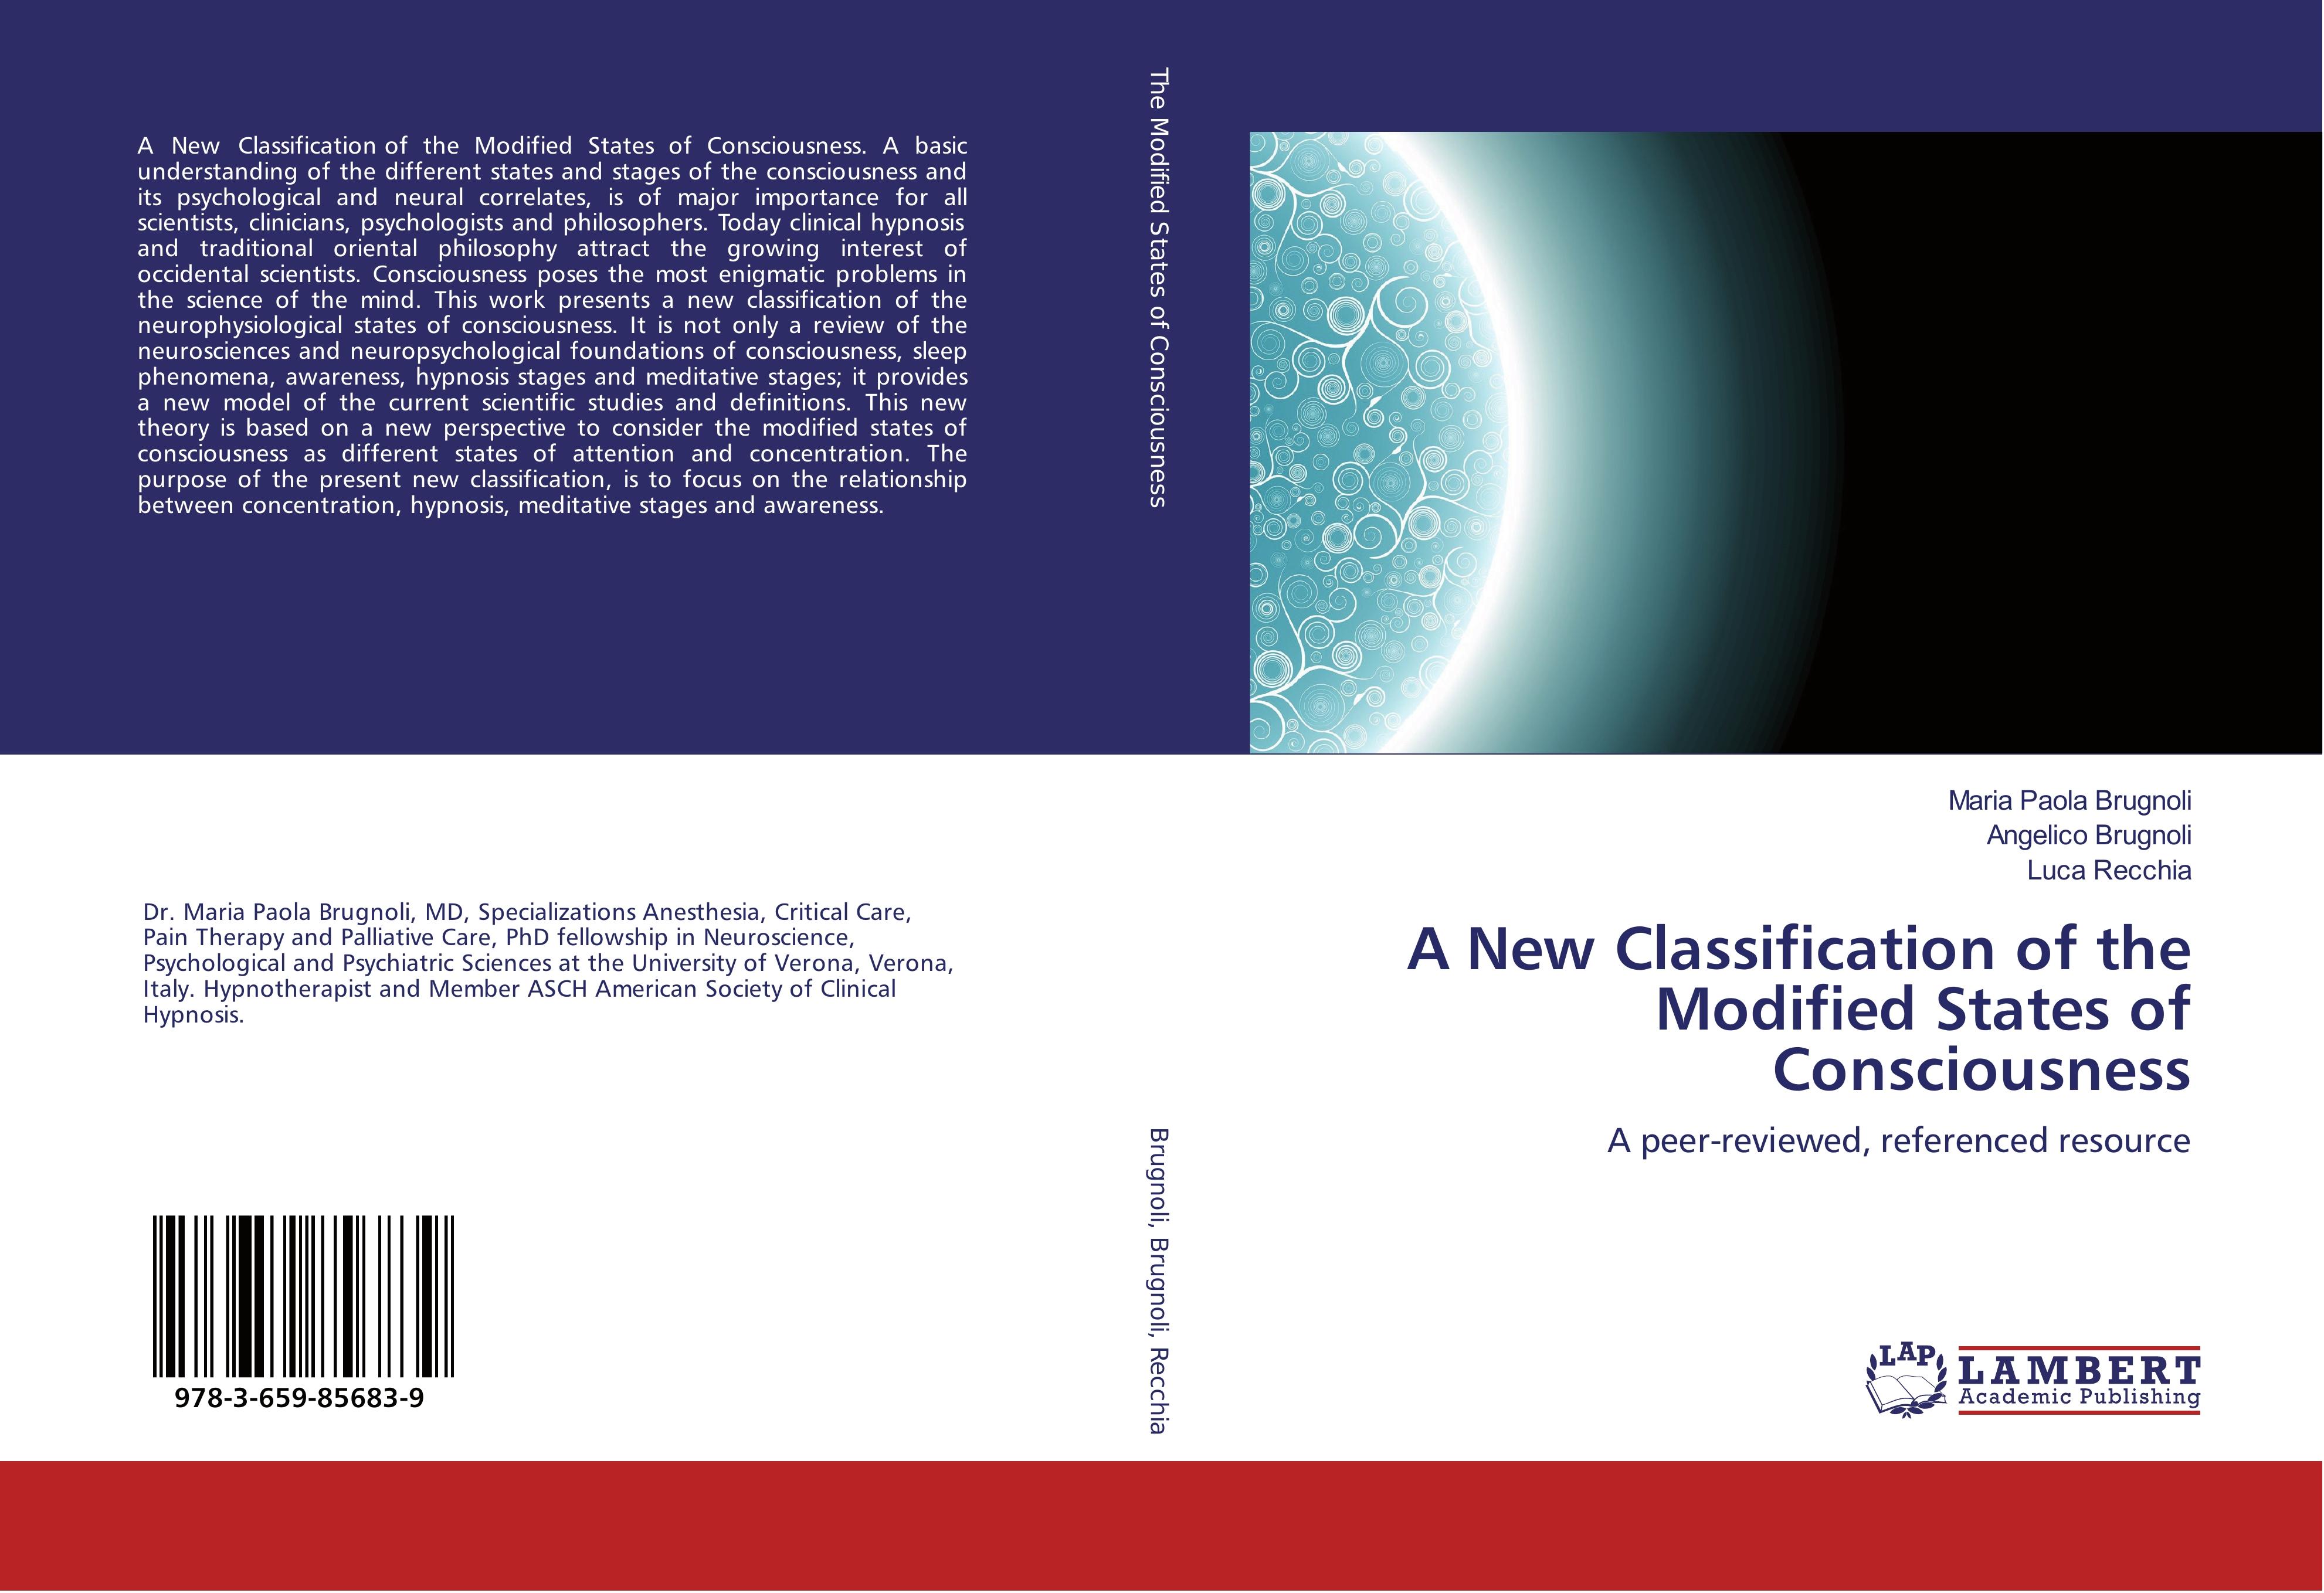 A New Classification of the Modified States of Consciousness - Maria Paola Brugnoli|Angelico Brugnoli|Luca Recchia